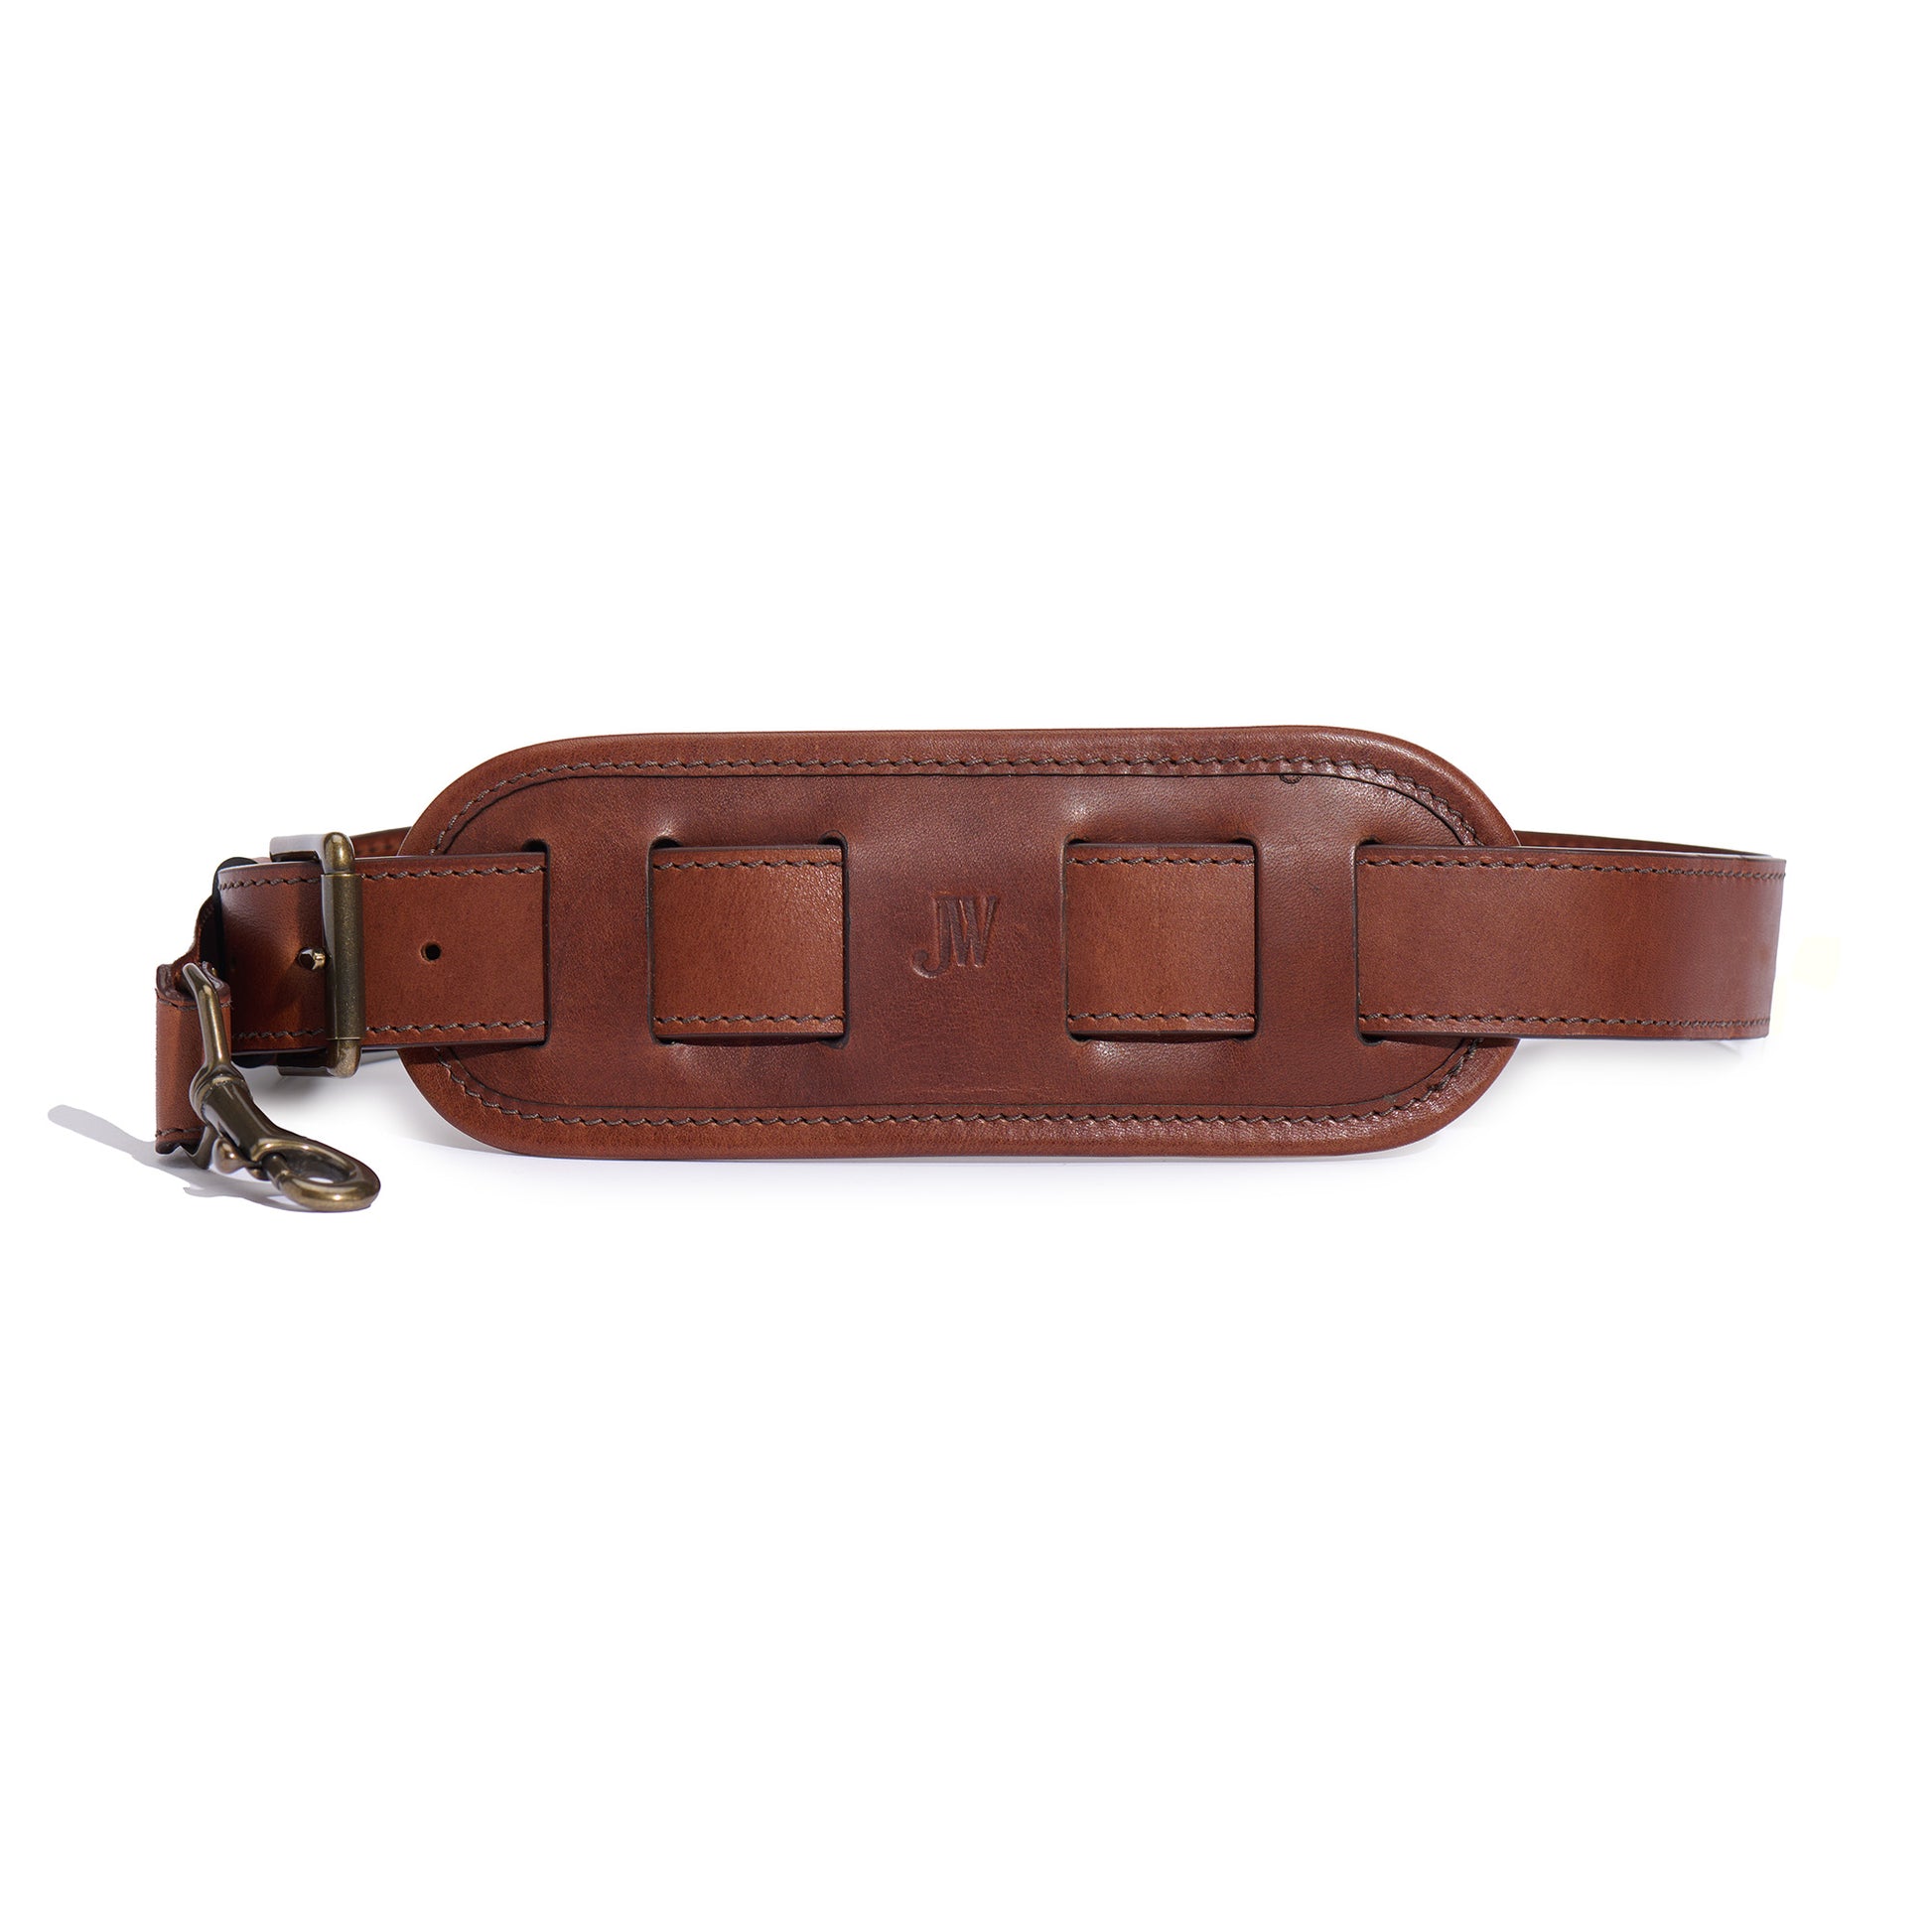 Esq. Briefcase Shoulder Strap in Vintage Brown Color Leather